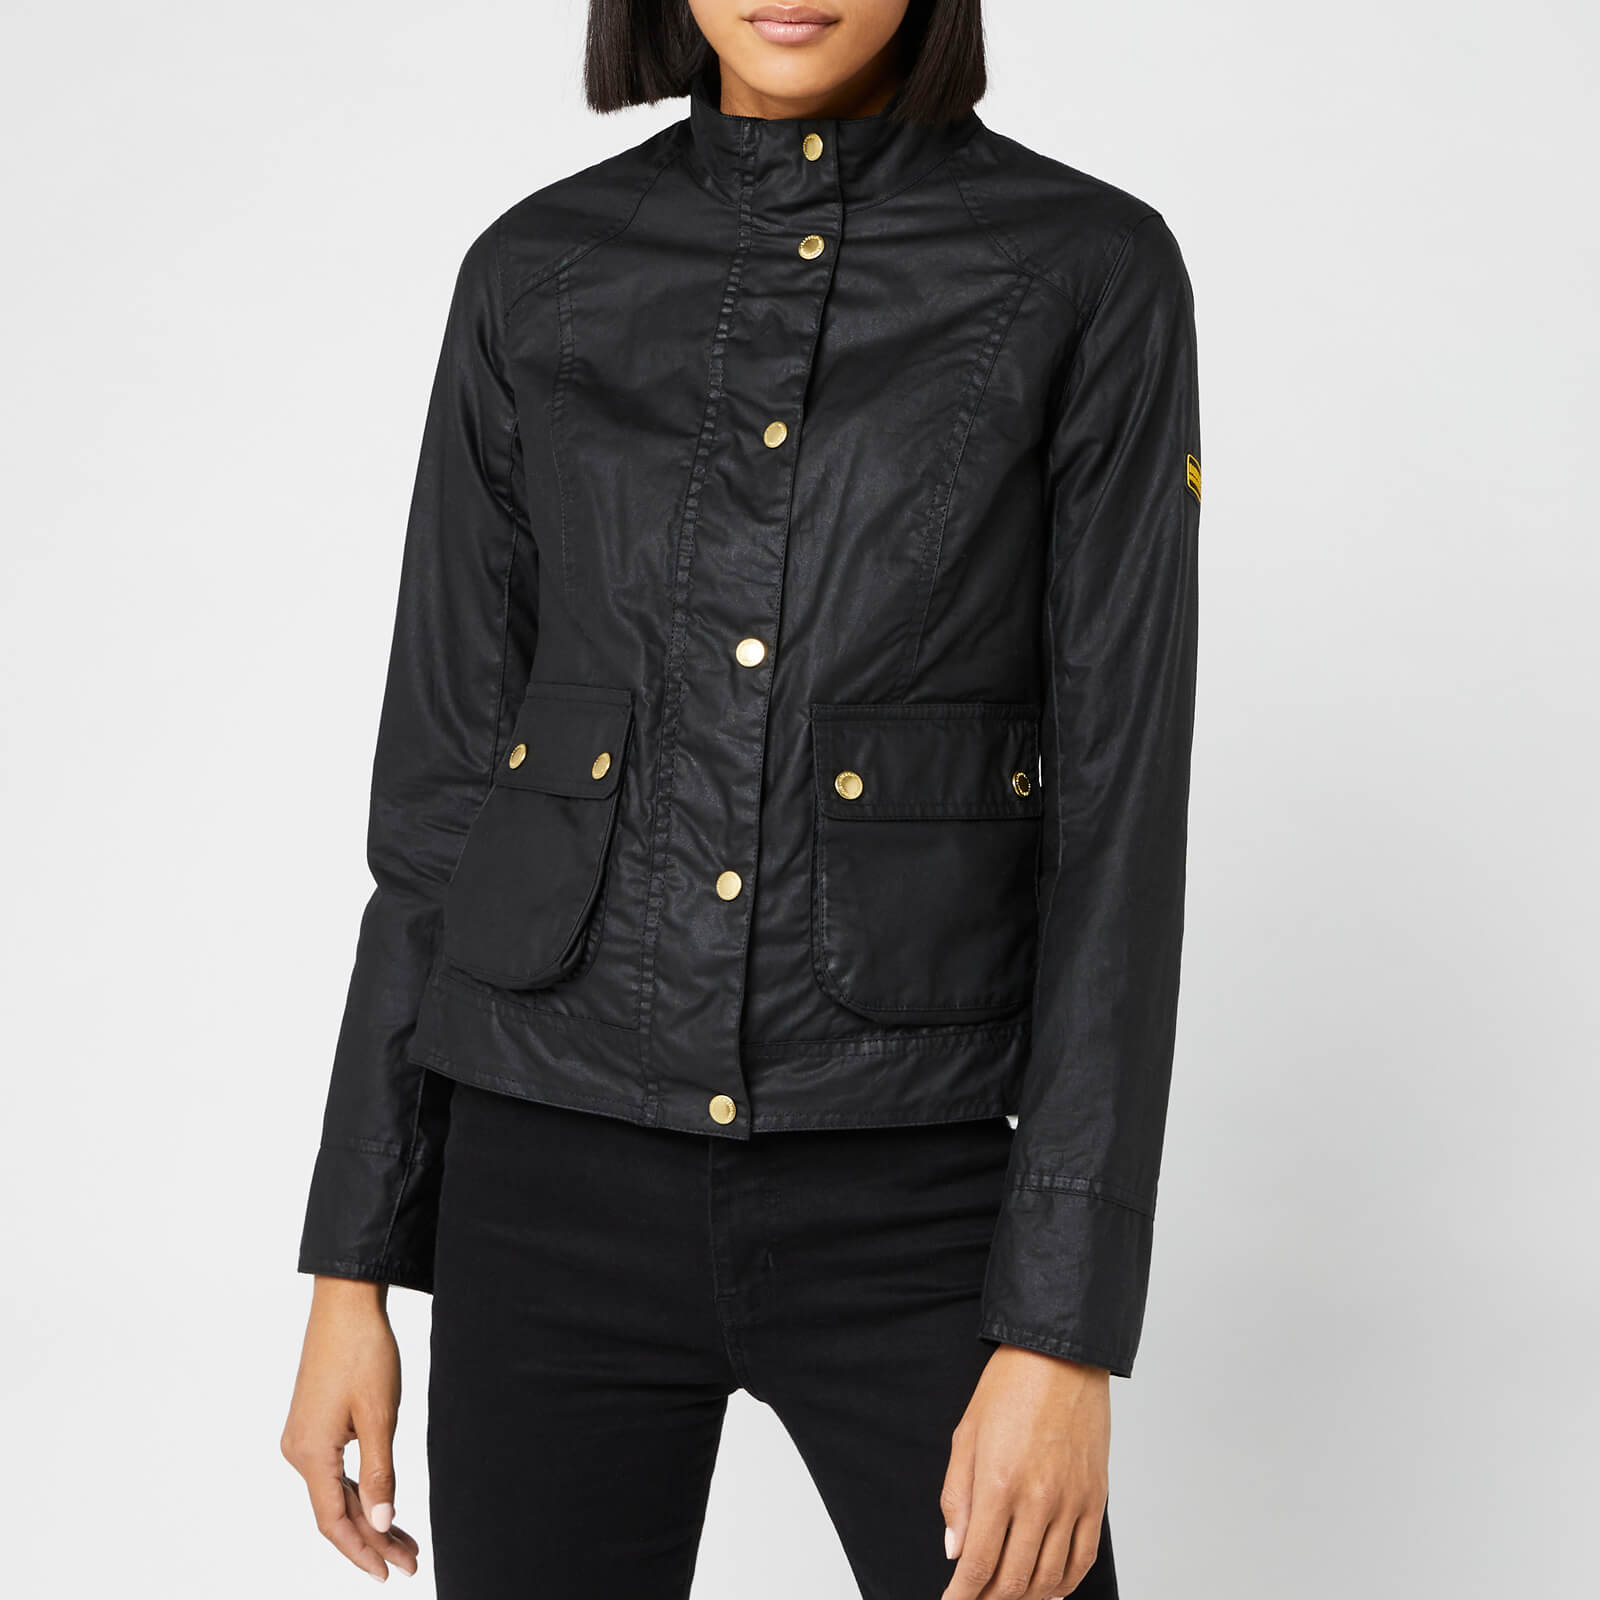 barbour international jacket women's sale